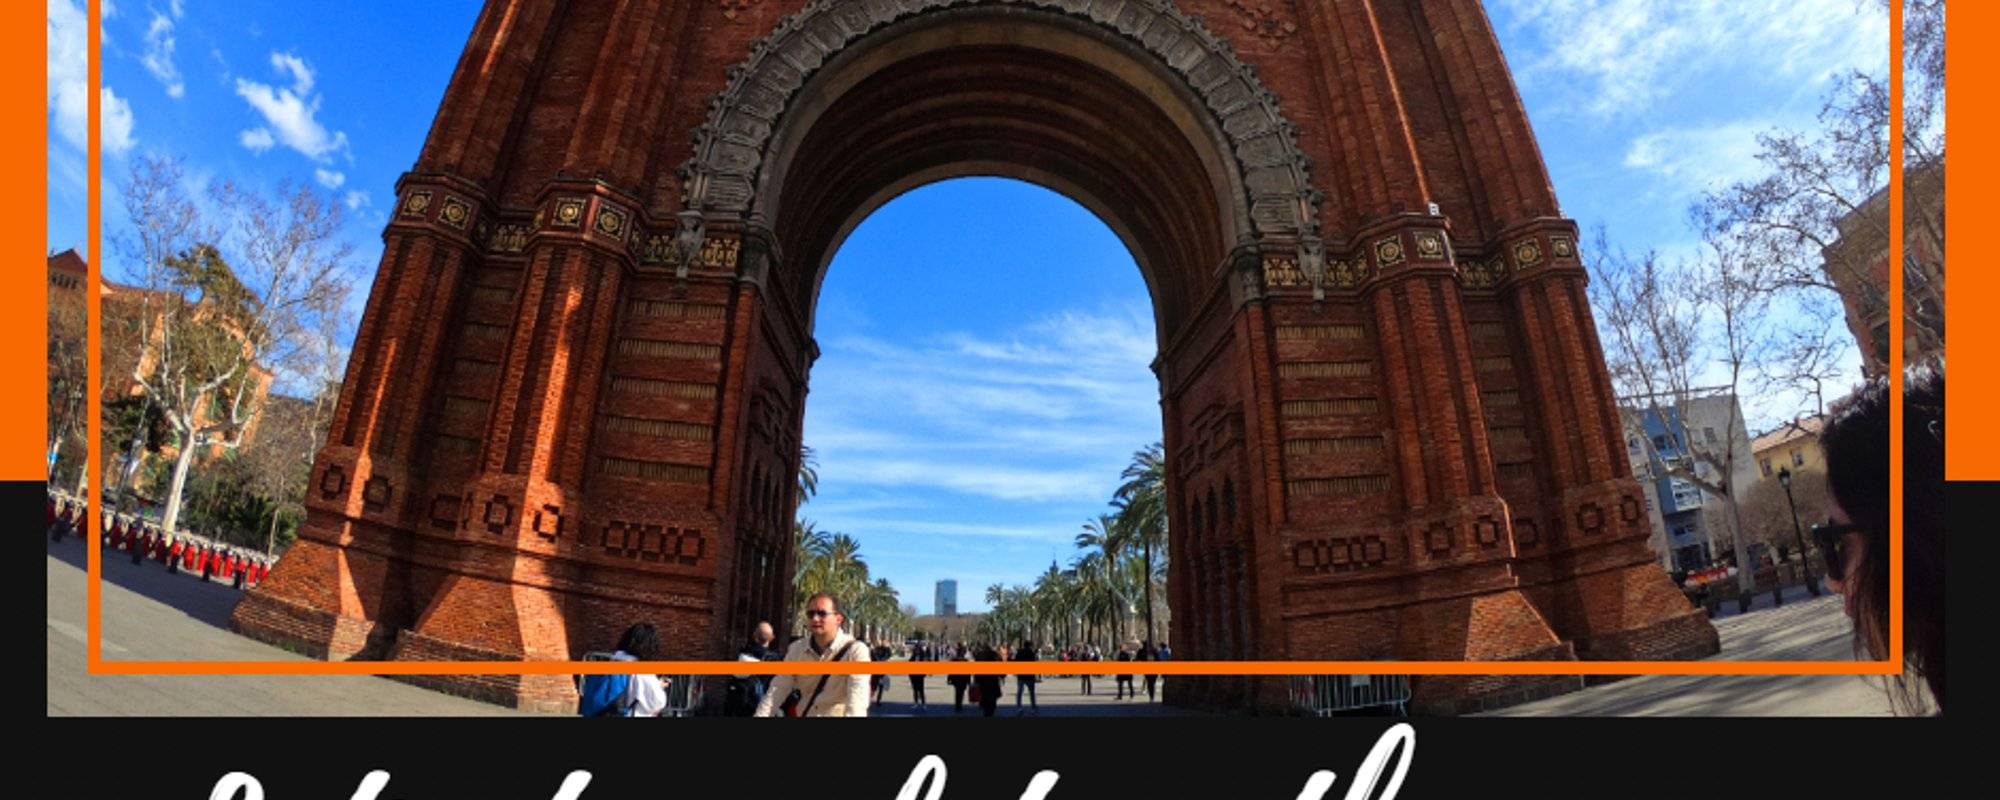 Let's travel together #117 - Arc de Triomf (Barcelona Tour)